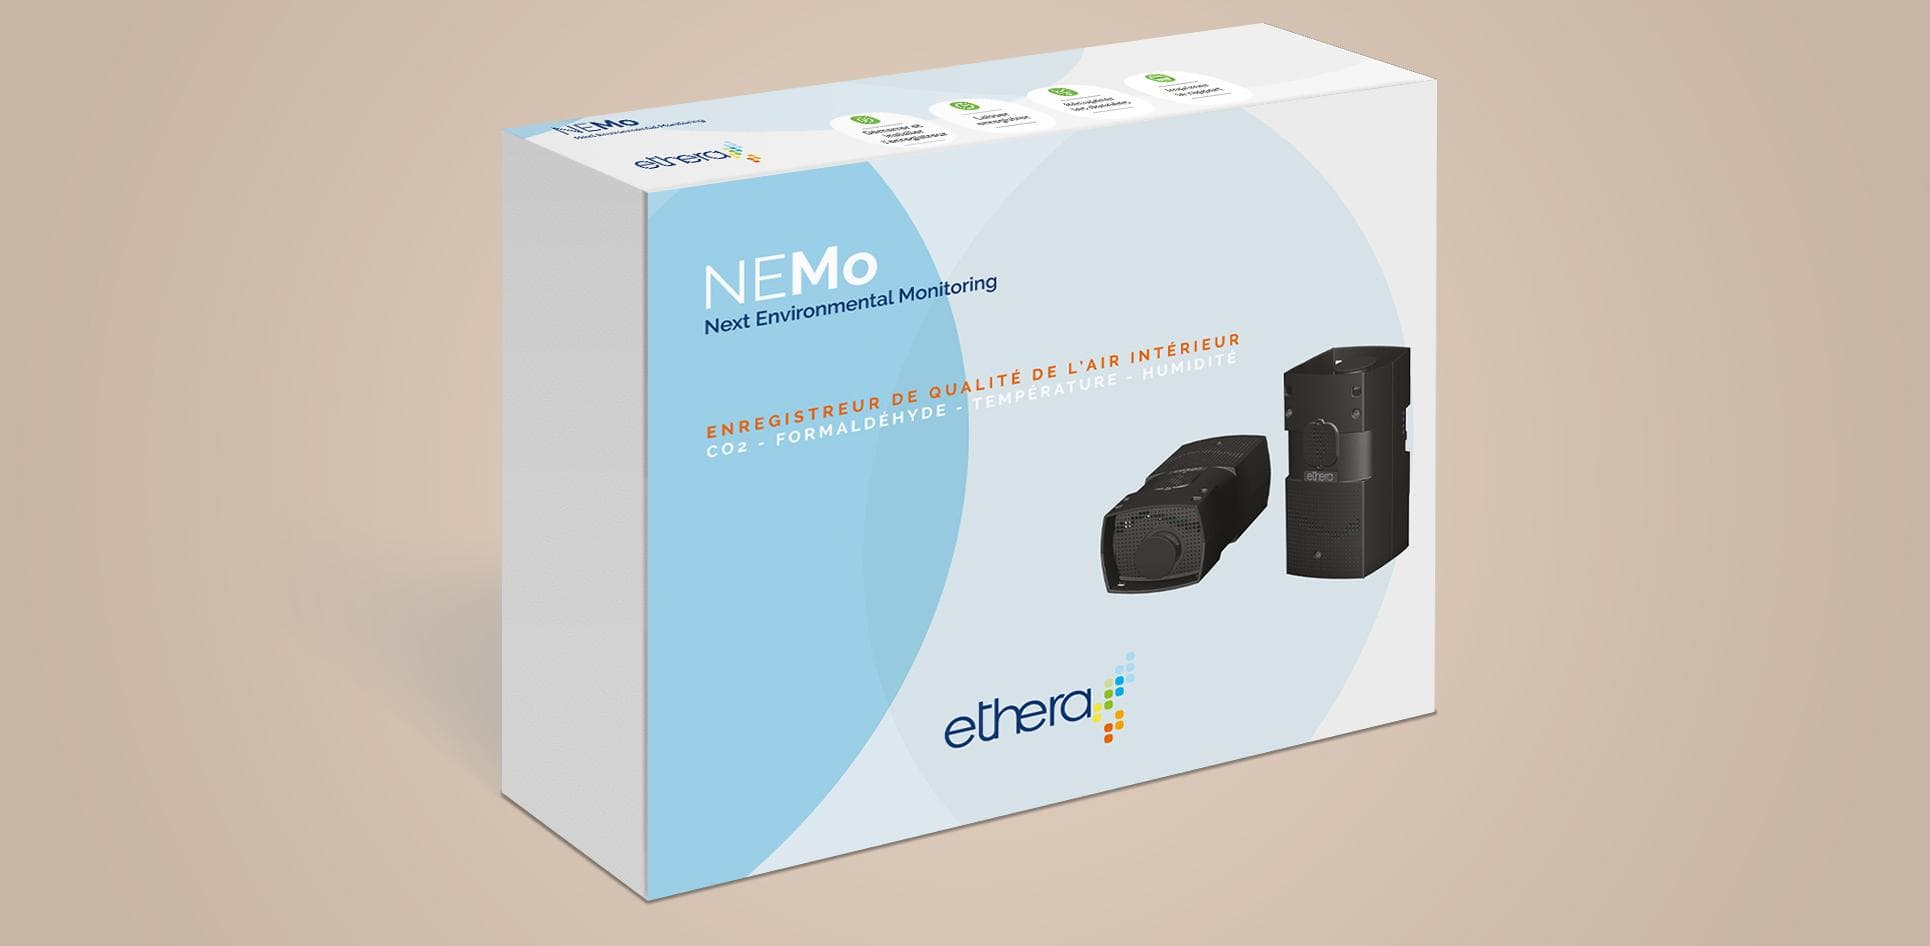 Packaging Ethera NEMo